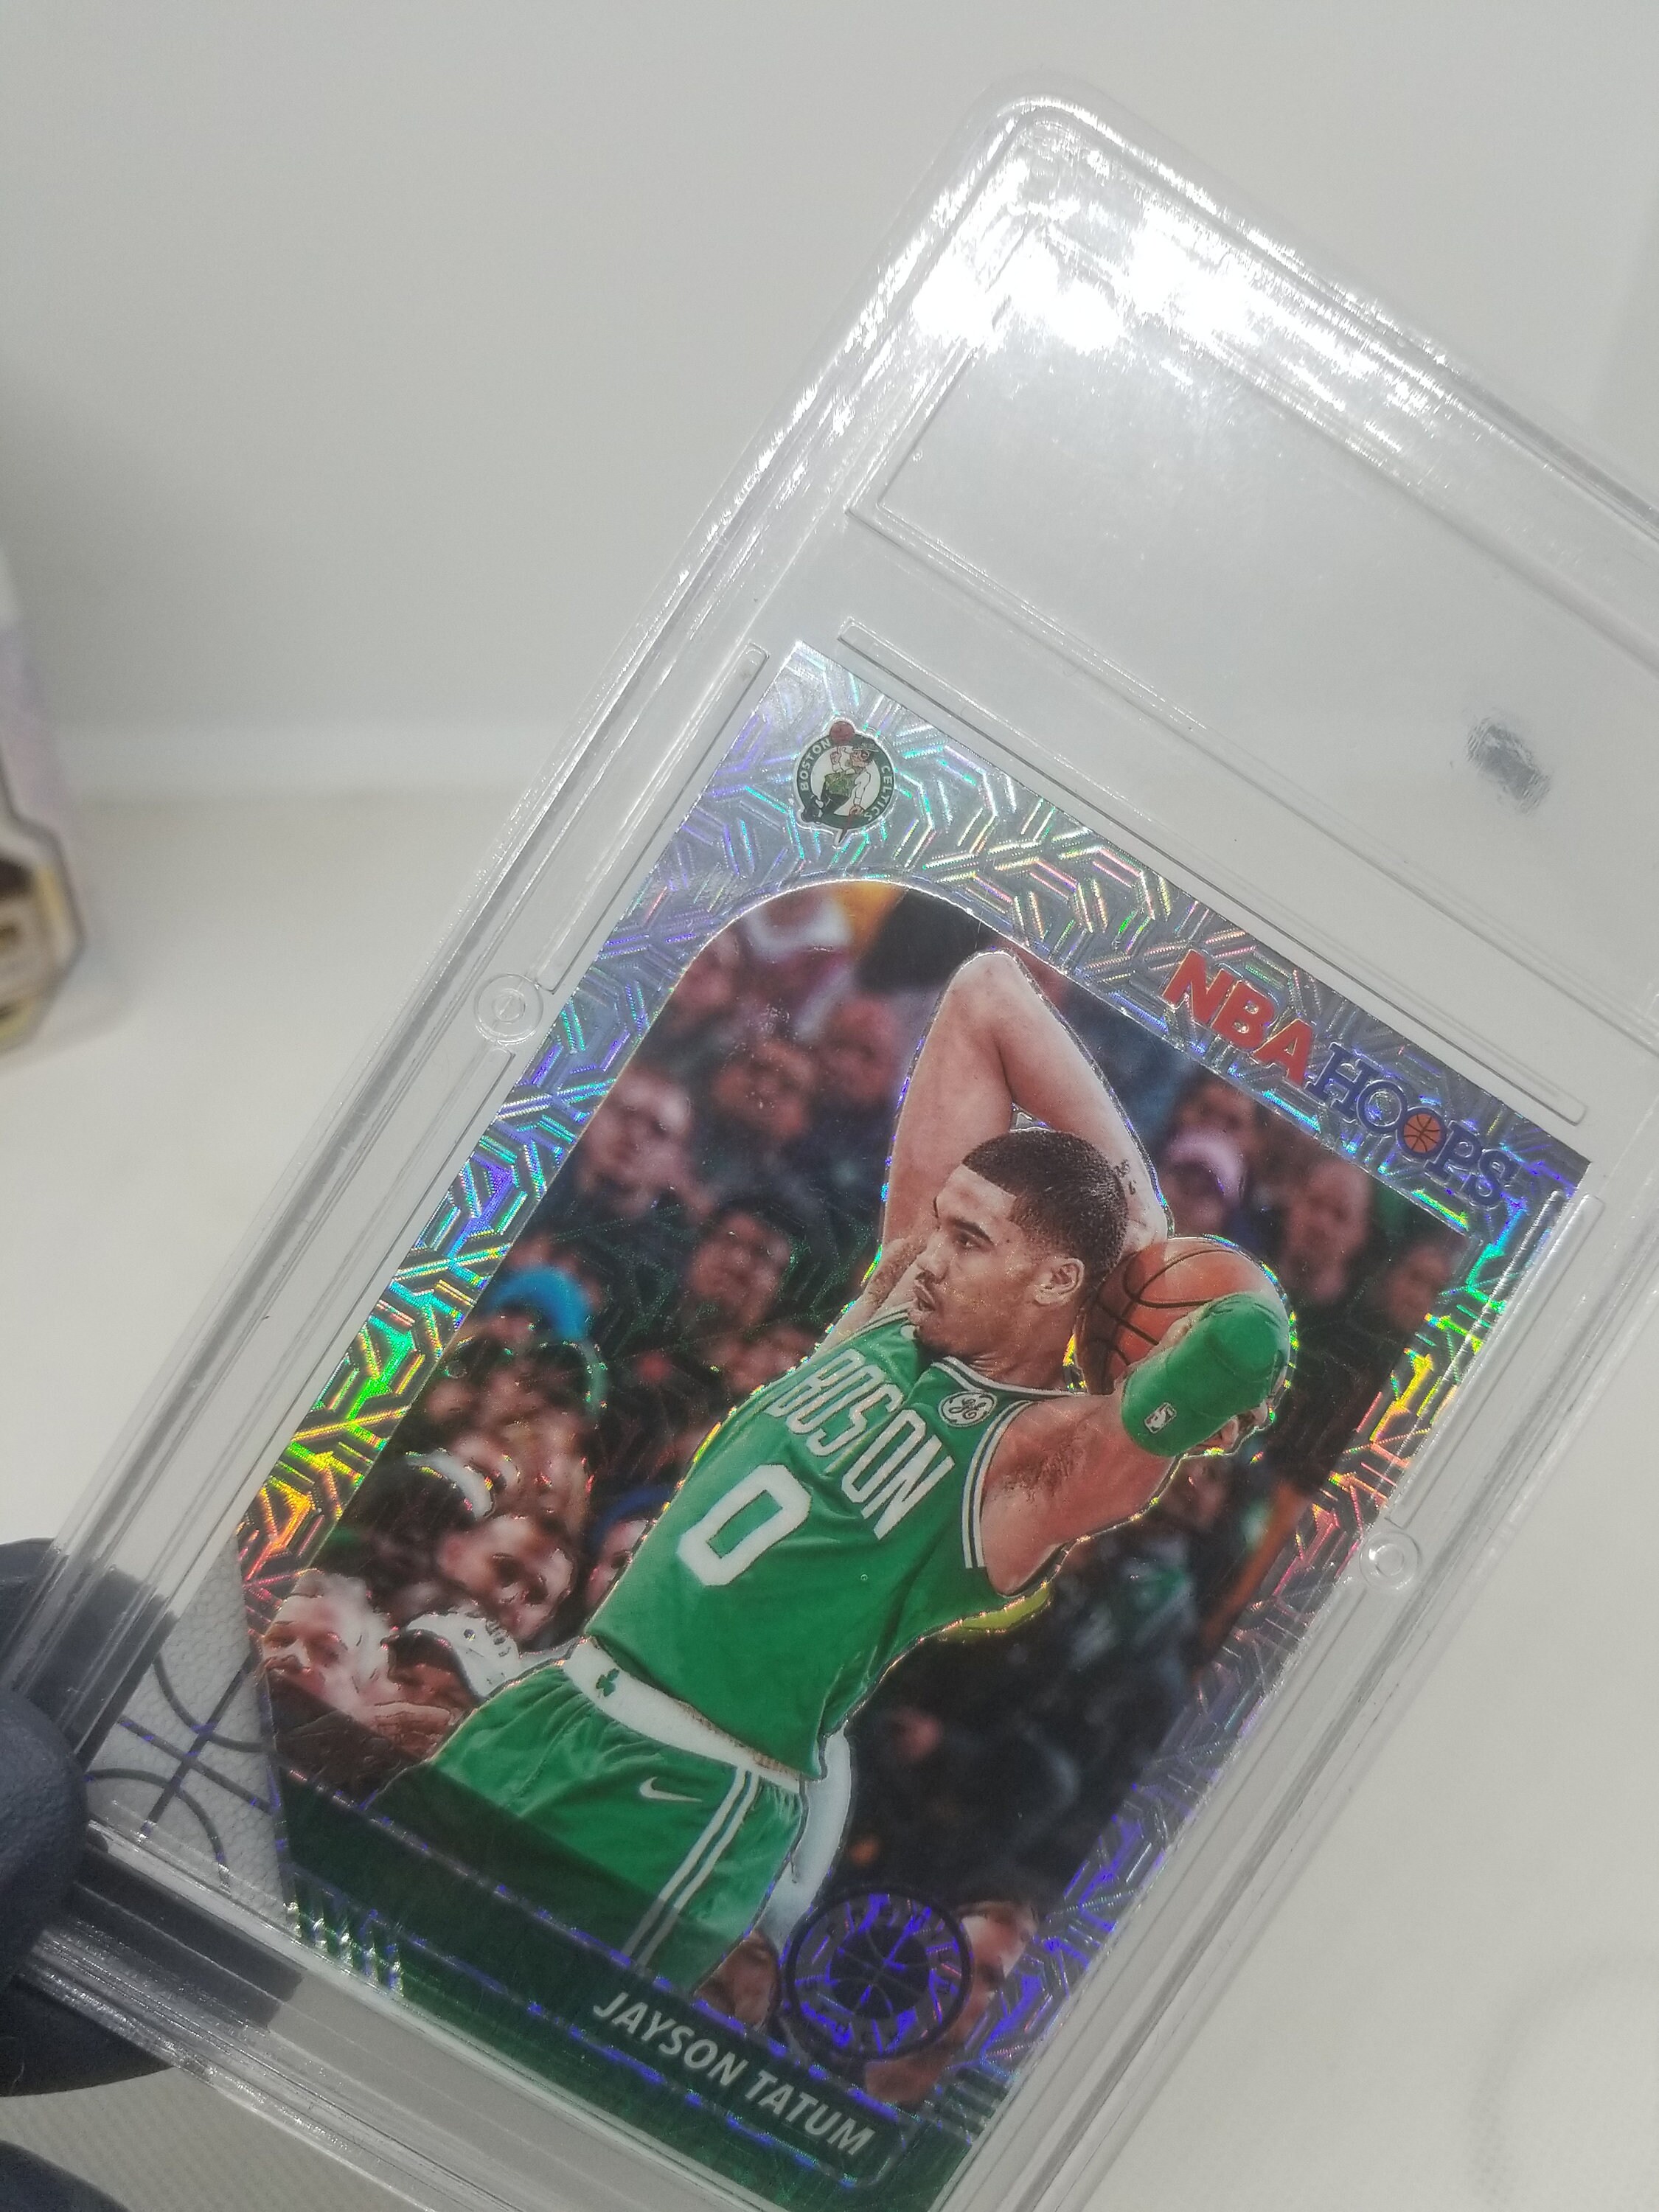  Jayson Tatum 2022 2023 Donruss Basketball Series Mint Card #1  Picturing Him in His Green Boston Celtics Jersey : Collectibles & Fine Art